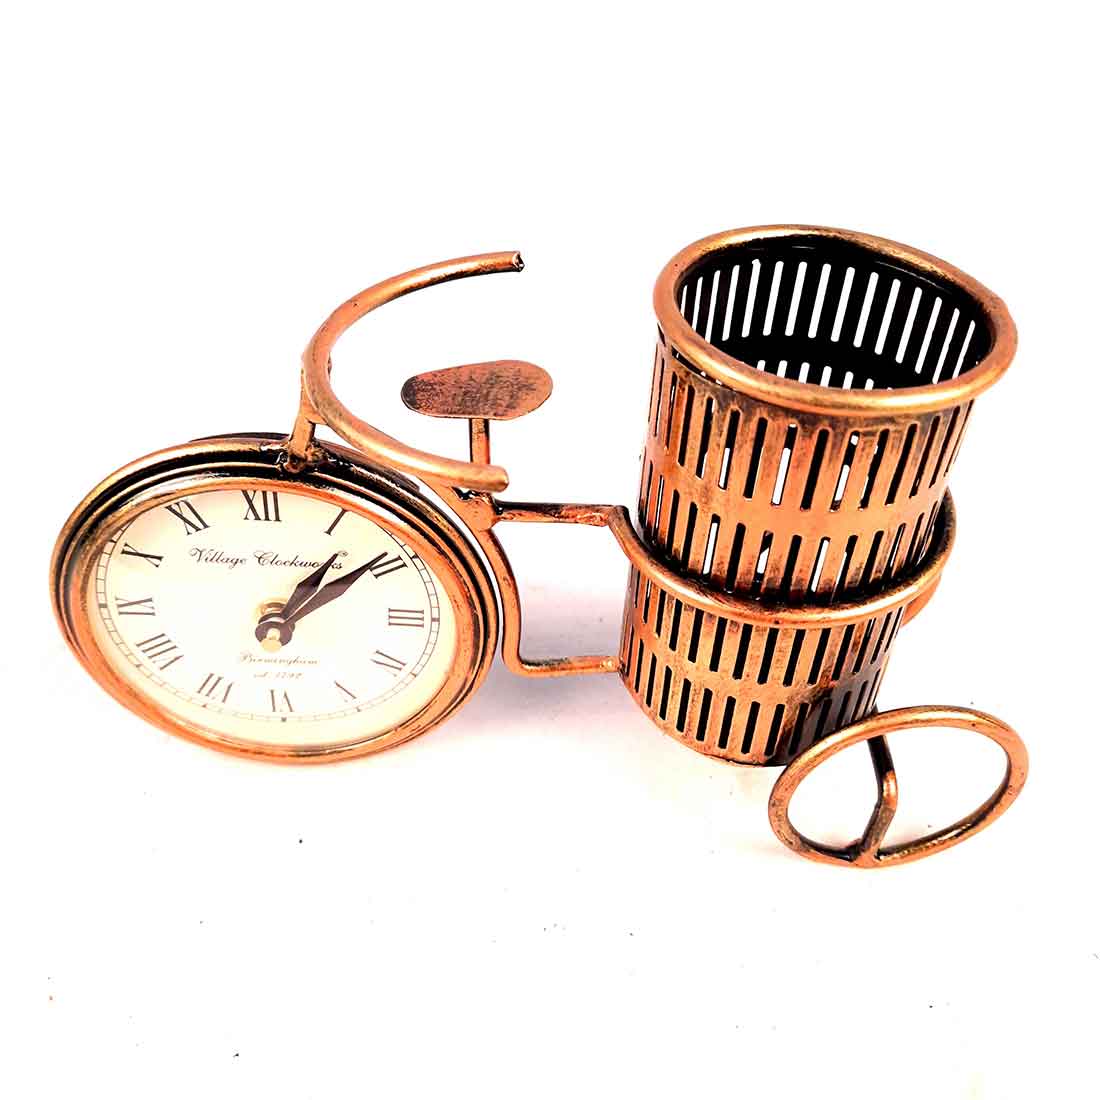 Antique Table Clock - For Table & Shlef Decor - 6 inch - ApkaMart